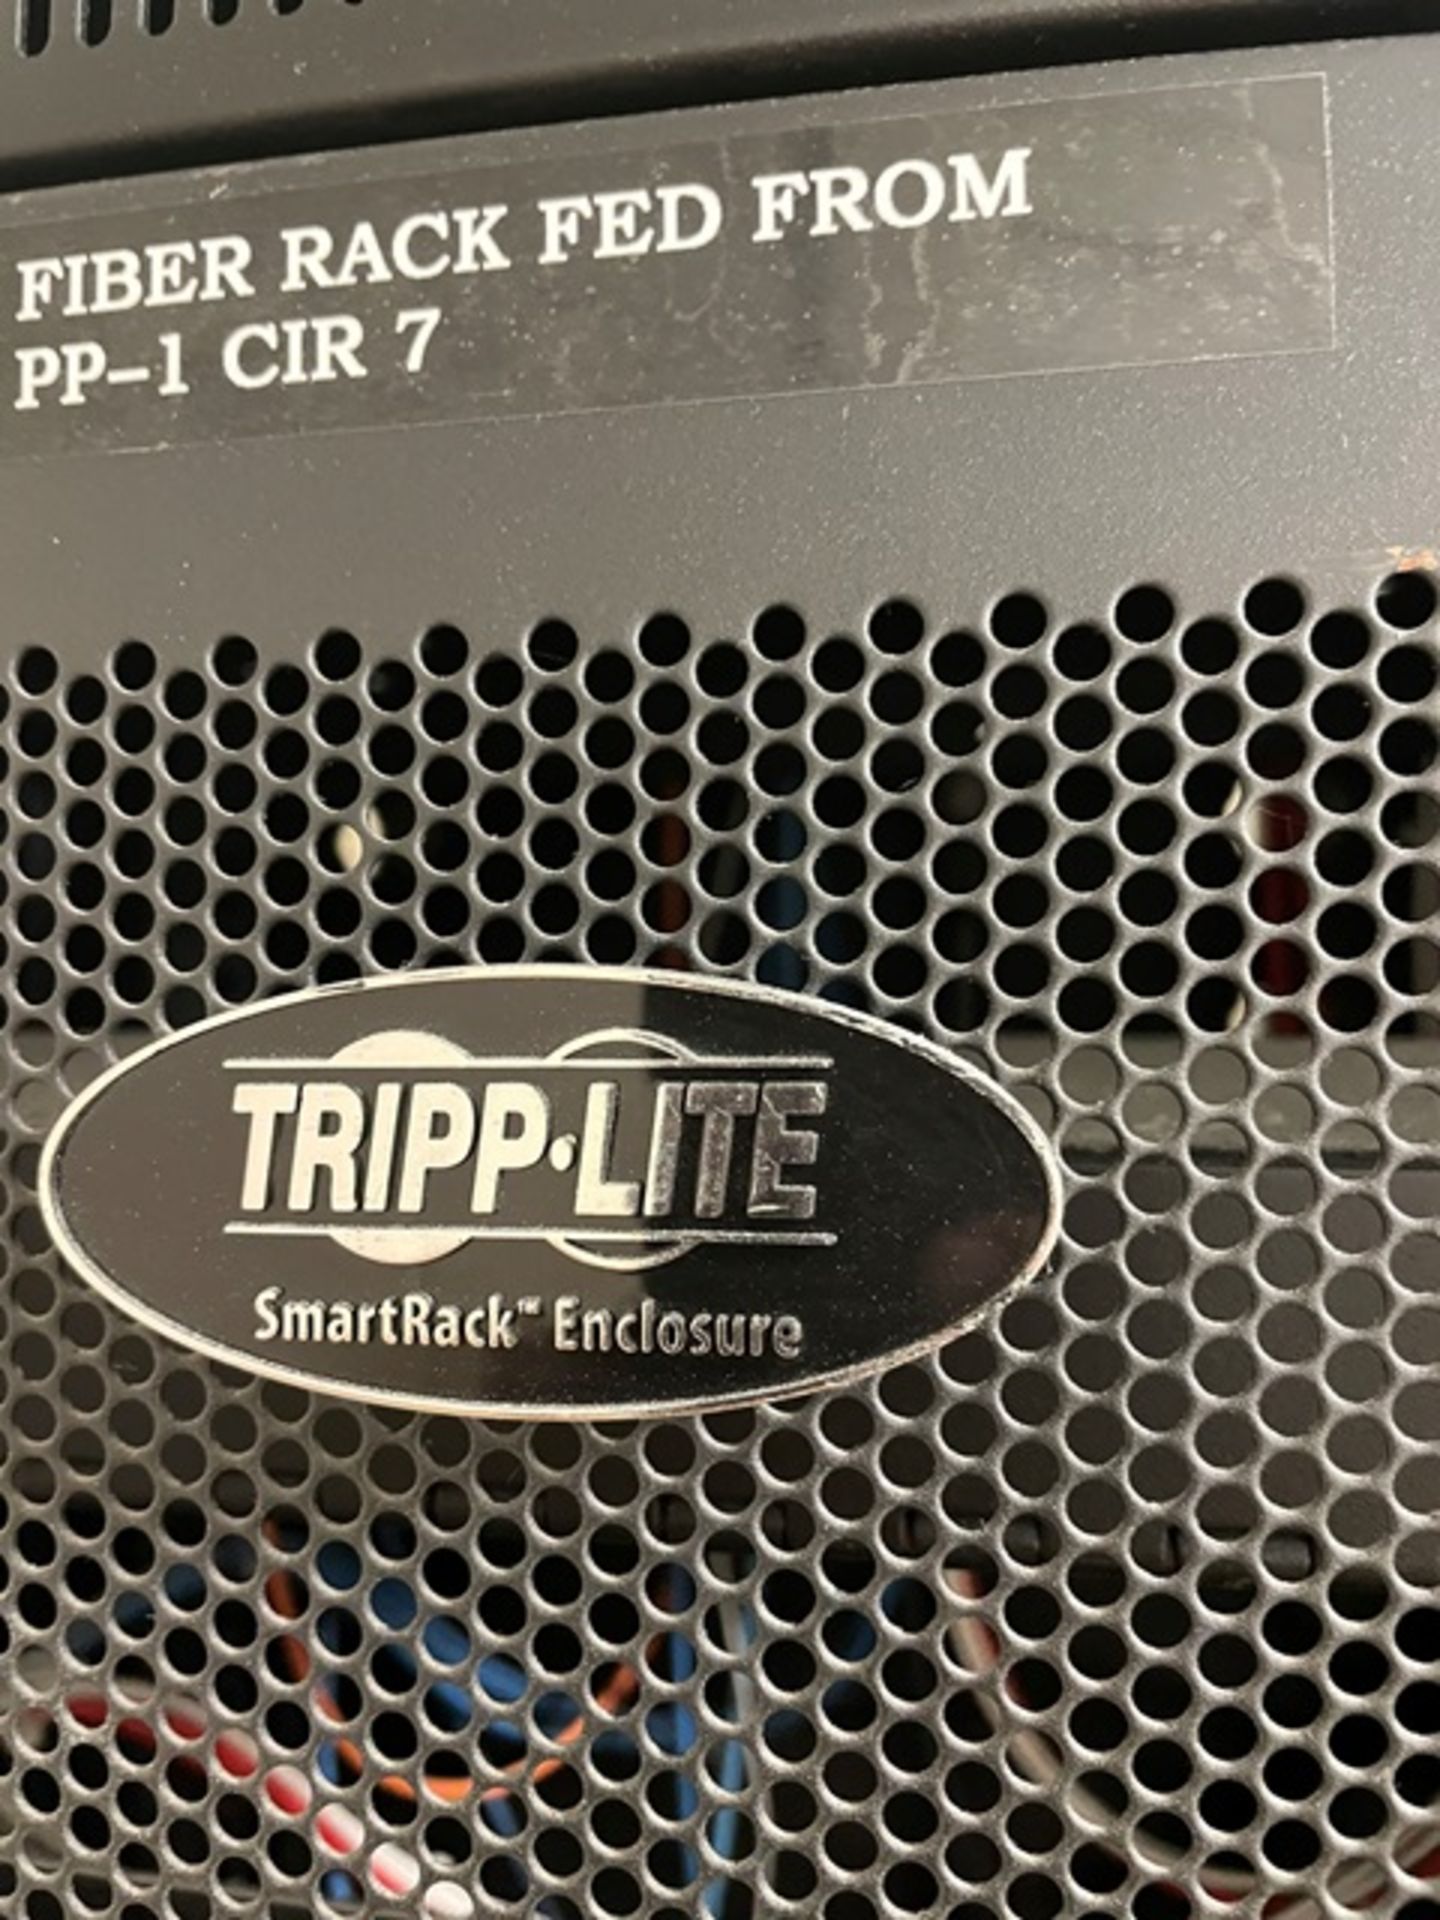 Tripp-Lite Smart rack Enclosure - Image 2 of 2